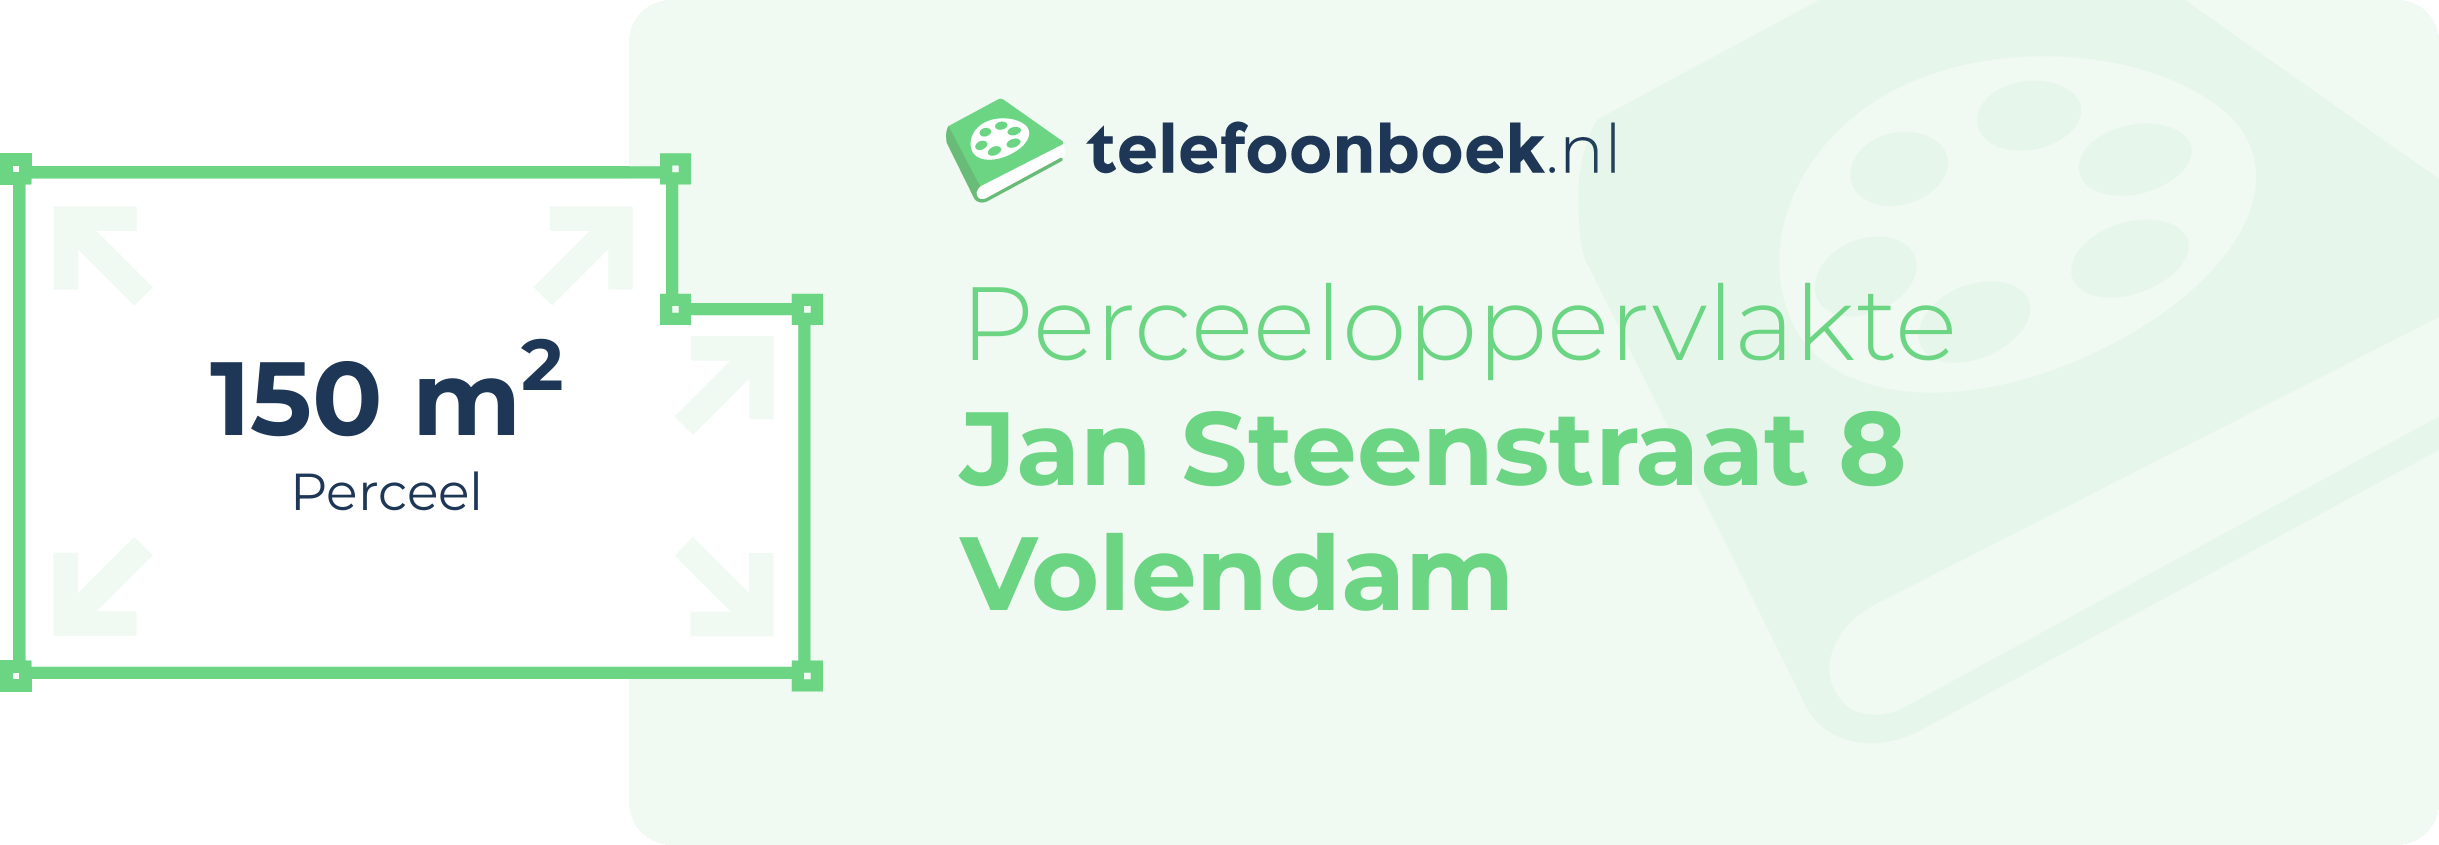 Perceeloppervlakte Jan Steenstraat 8 Volendam